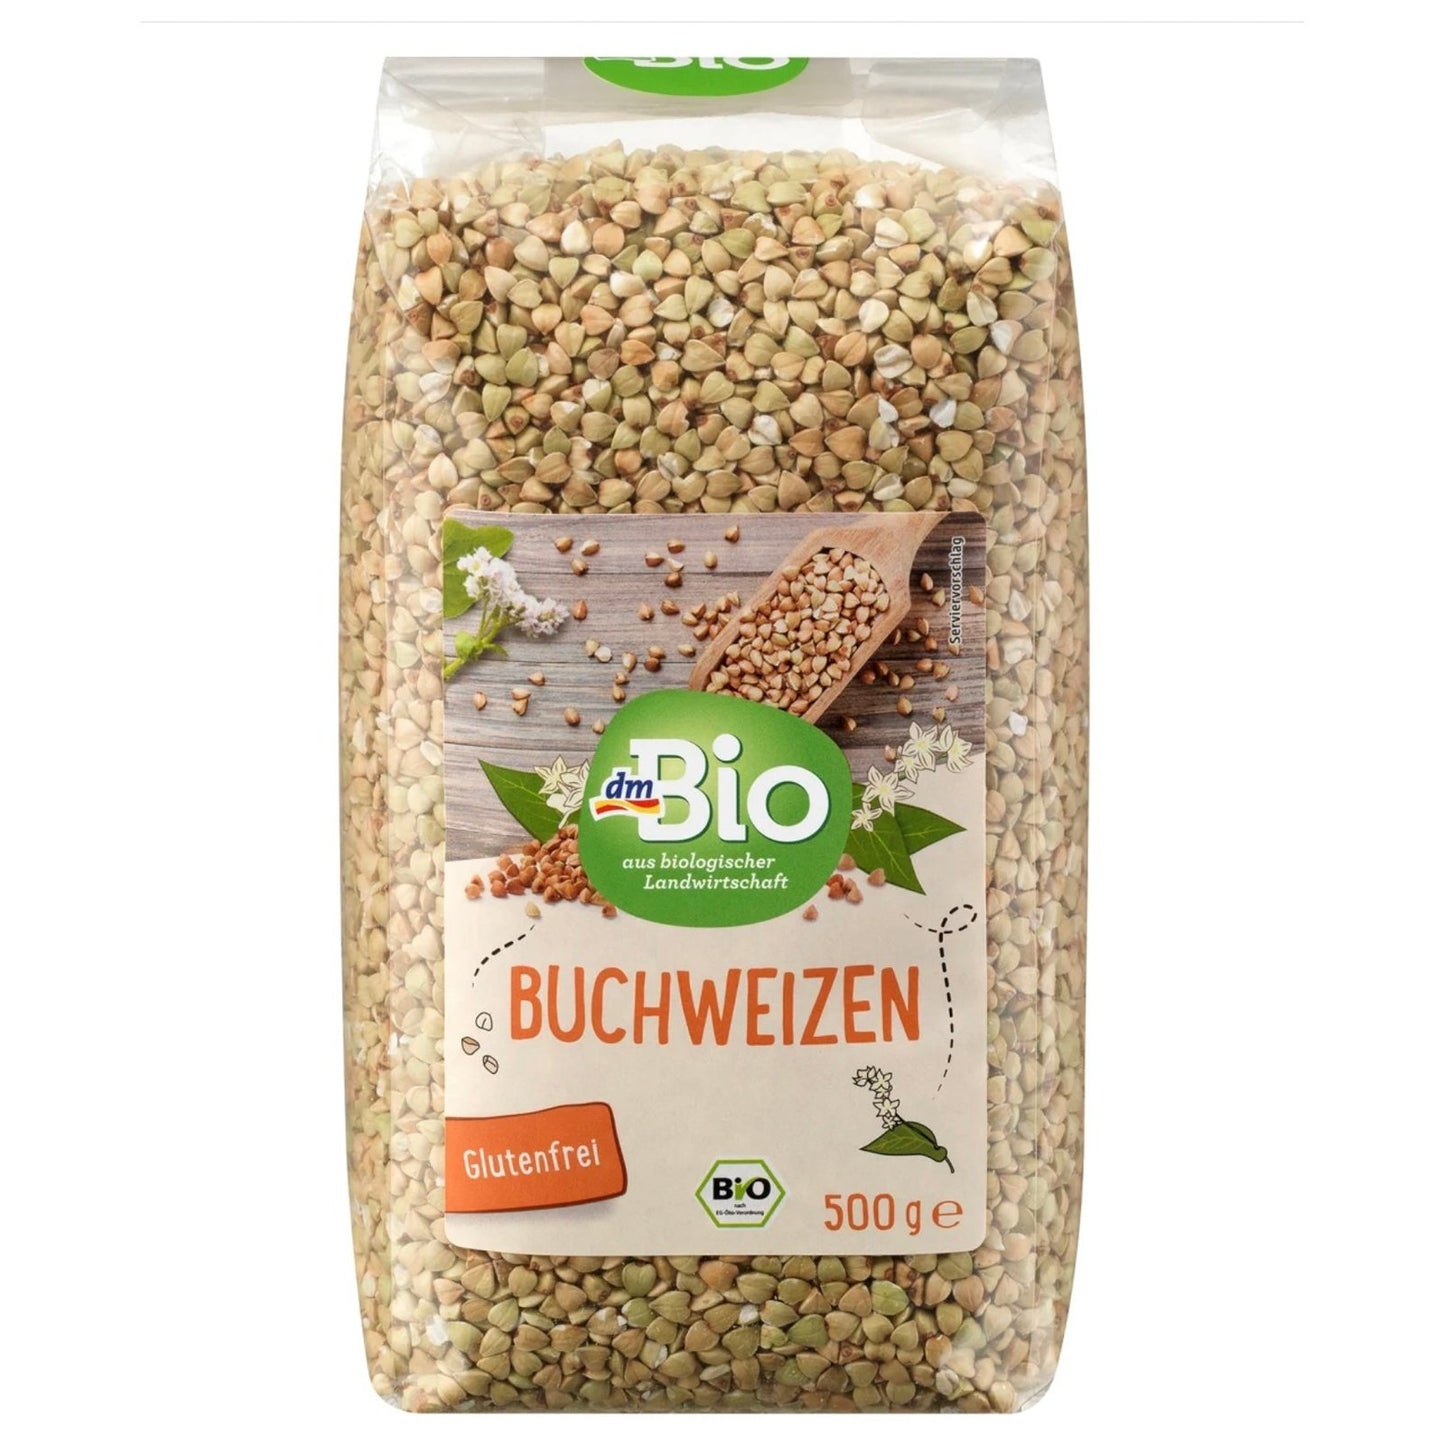 bio organic buckwheat gluten free front packaging